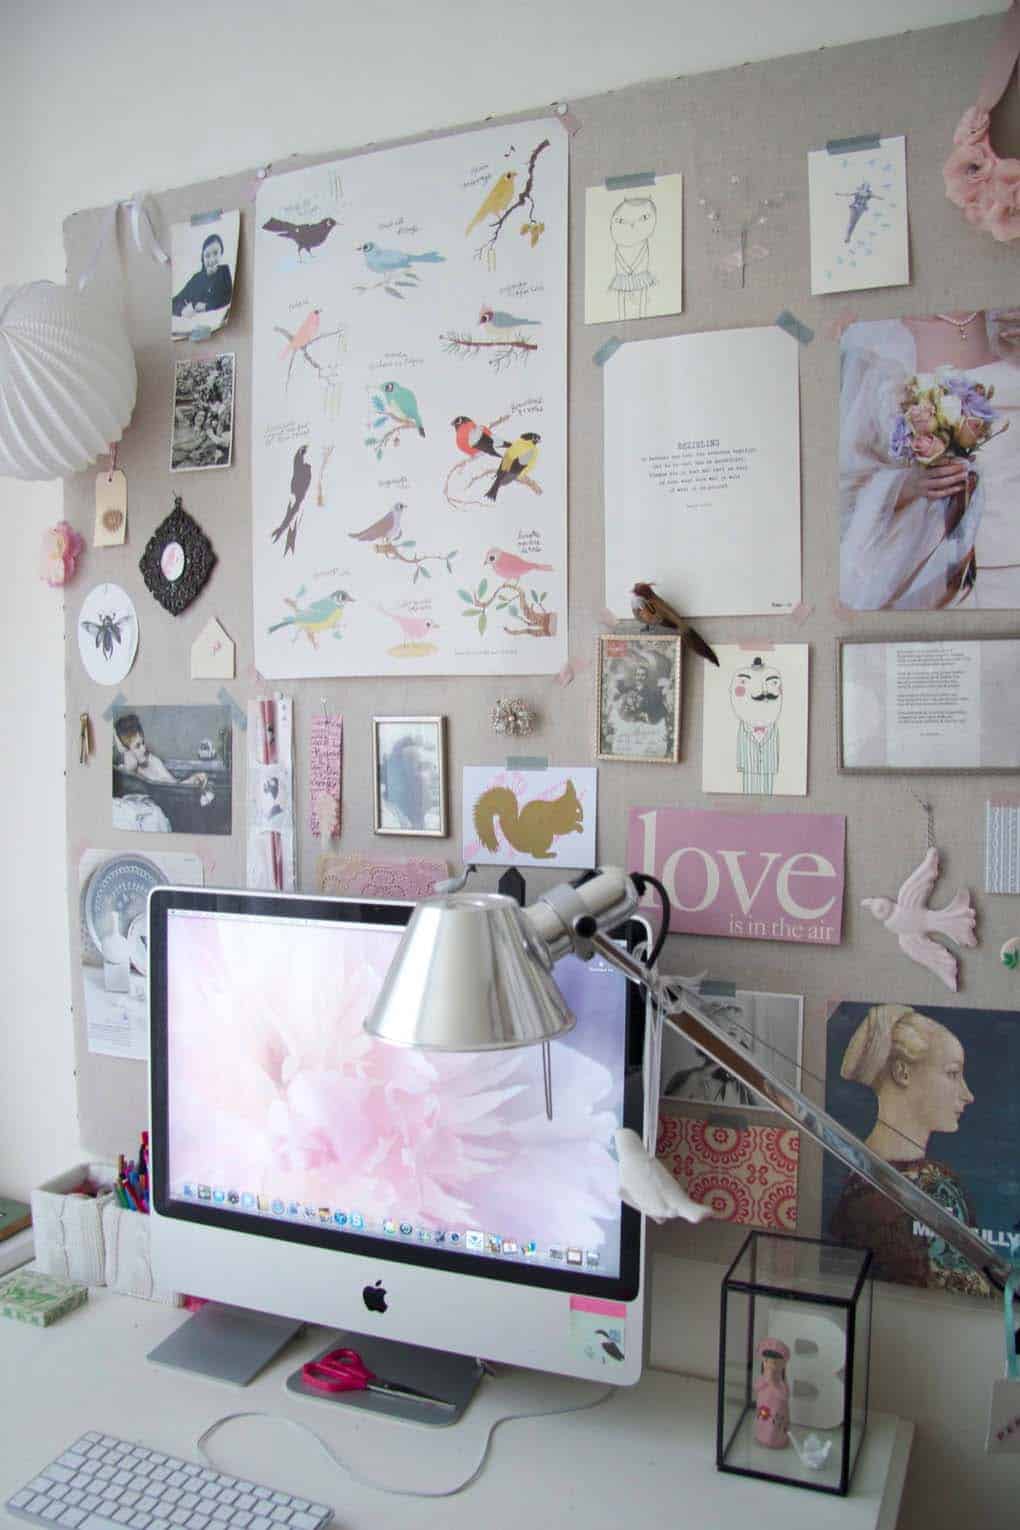 creative-home-office-design-ideas